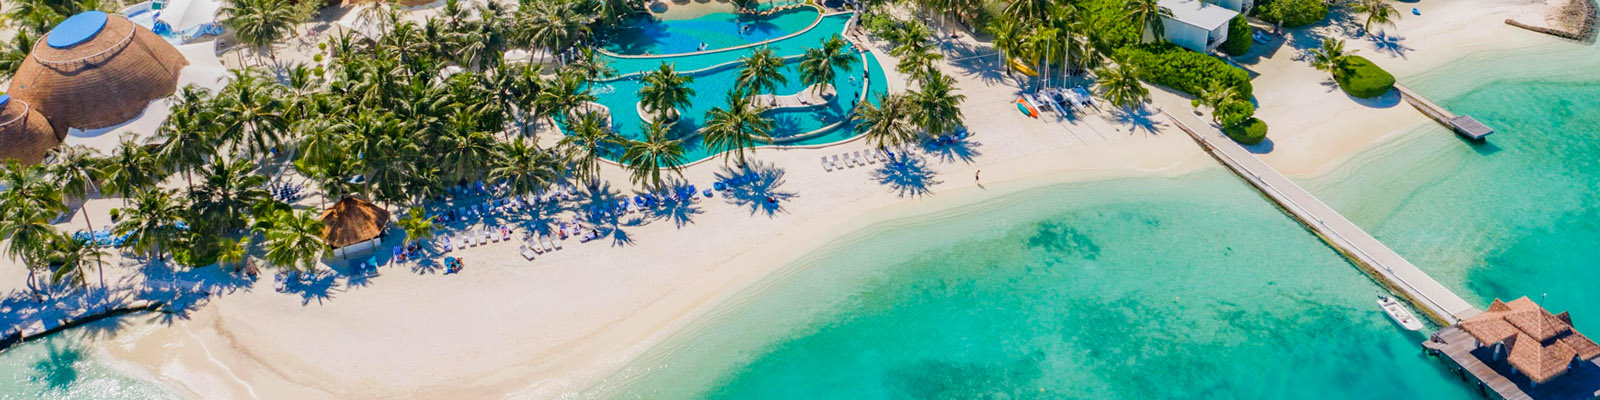 Paradiset Maldiverna